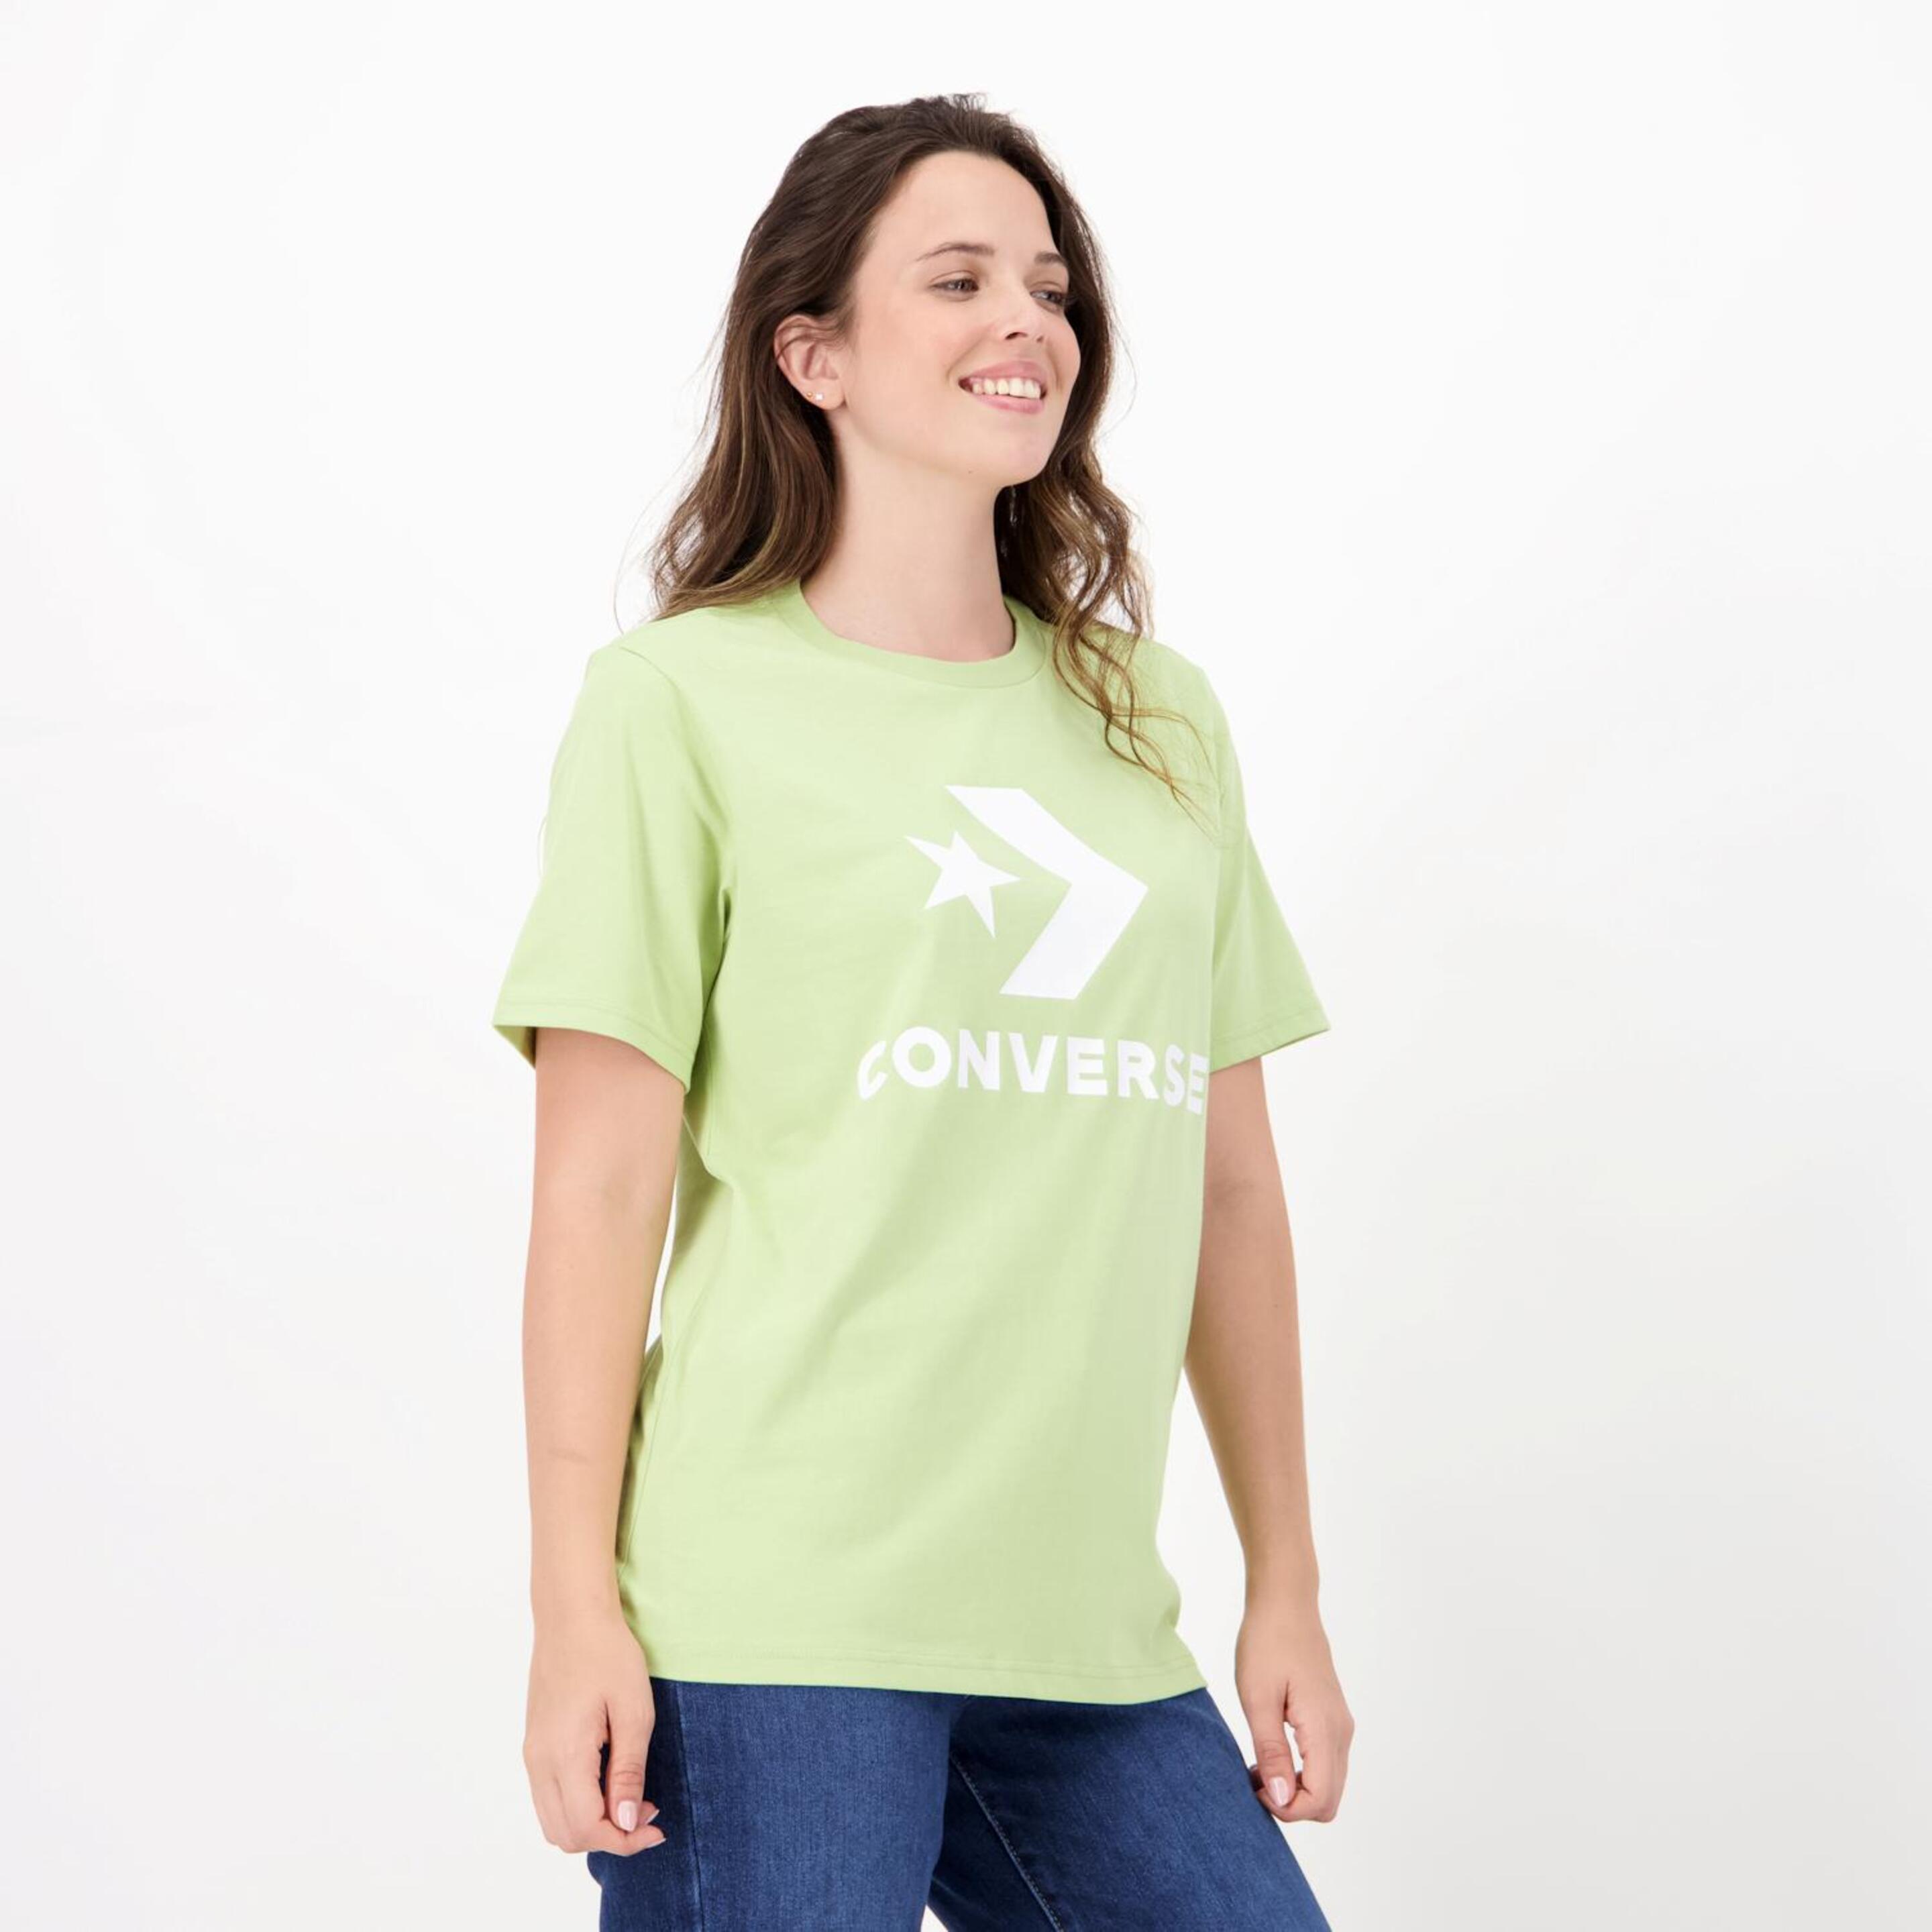 Converse Star Chevron - Verde - Camiseta Mujer